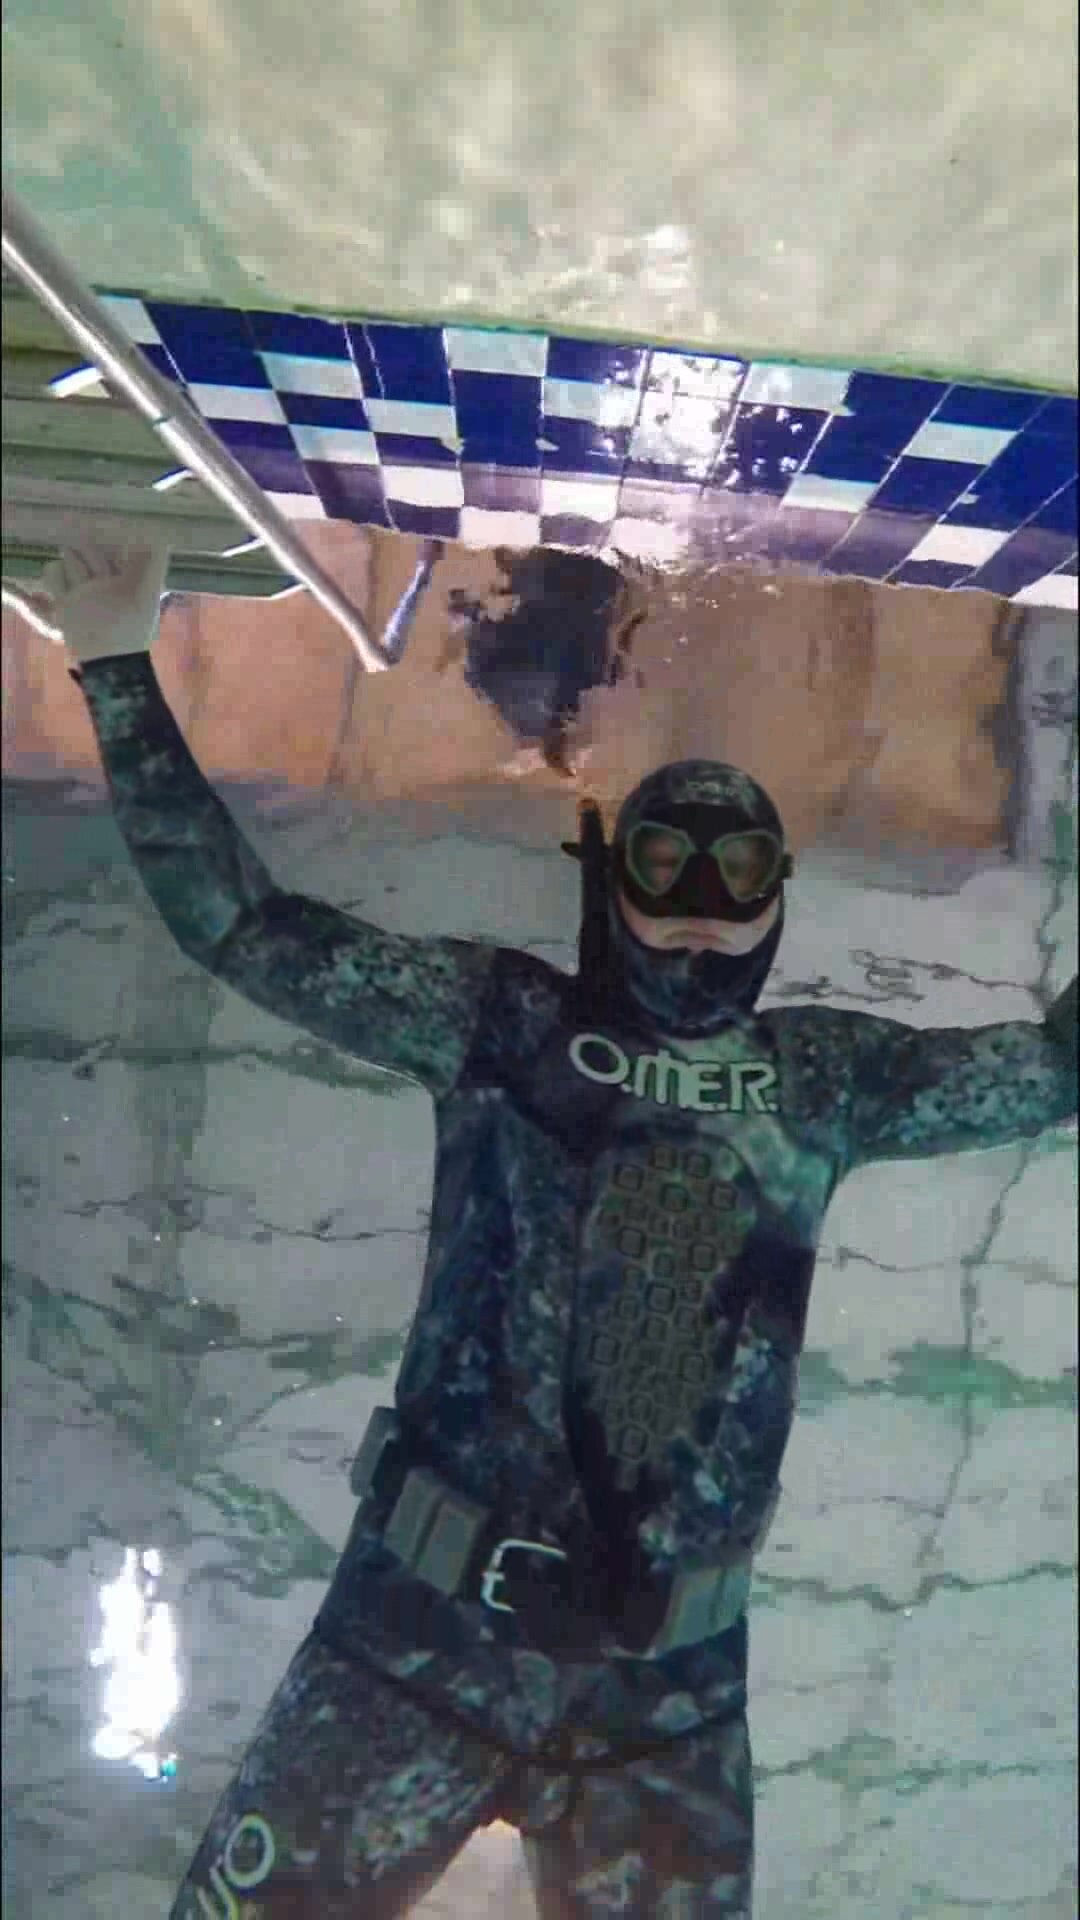 Underwater beefy freediver in tight wetsuit